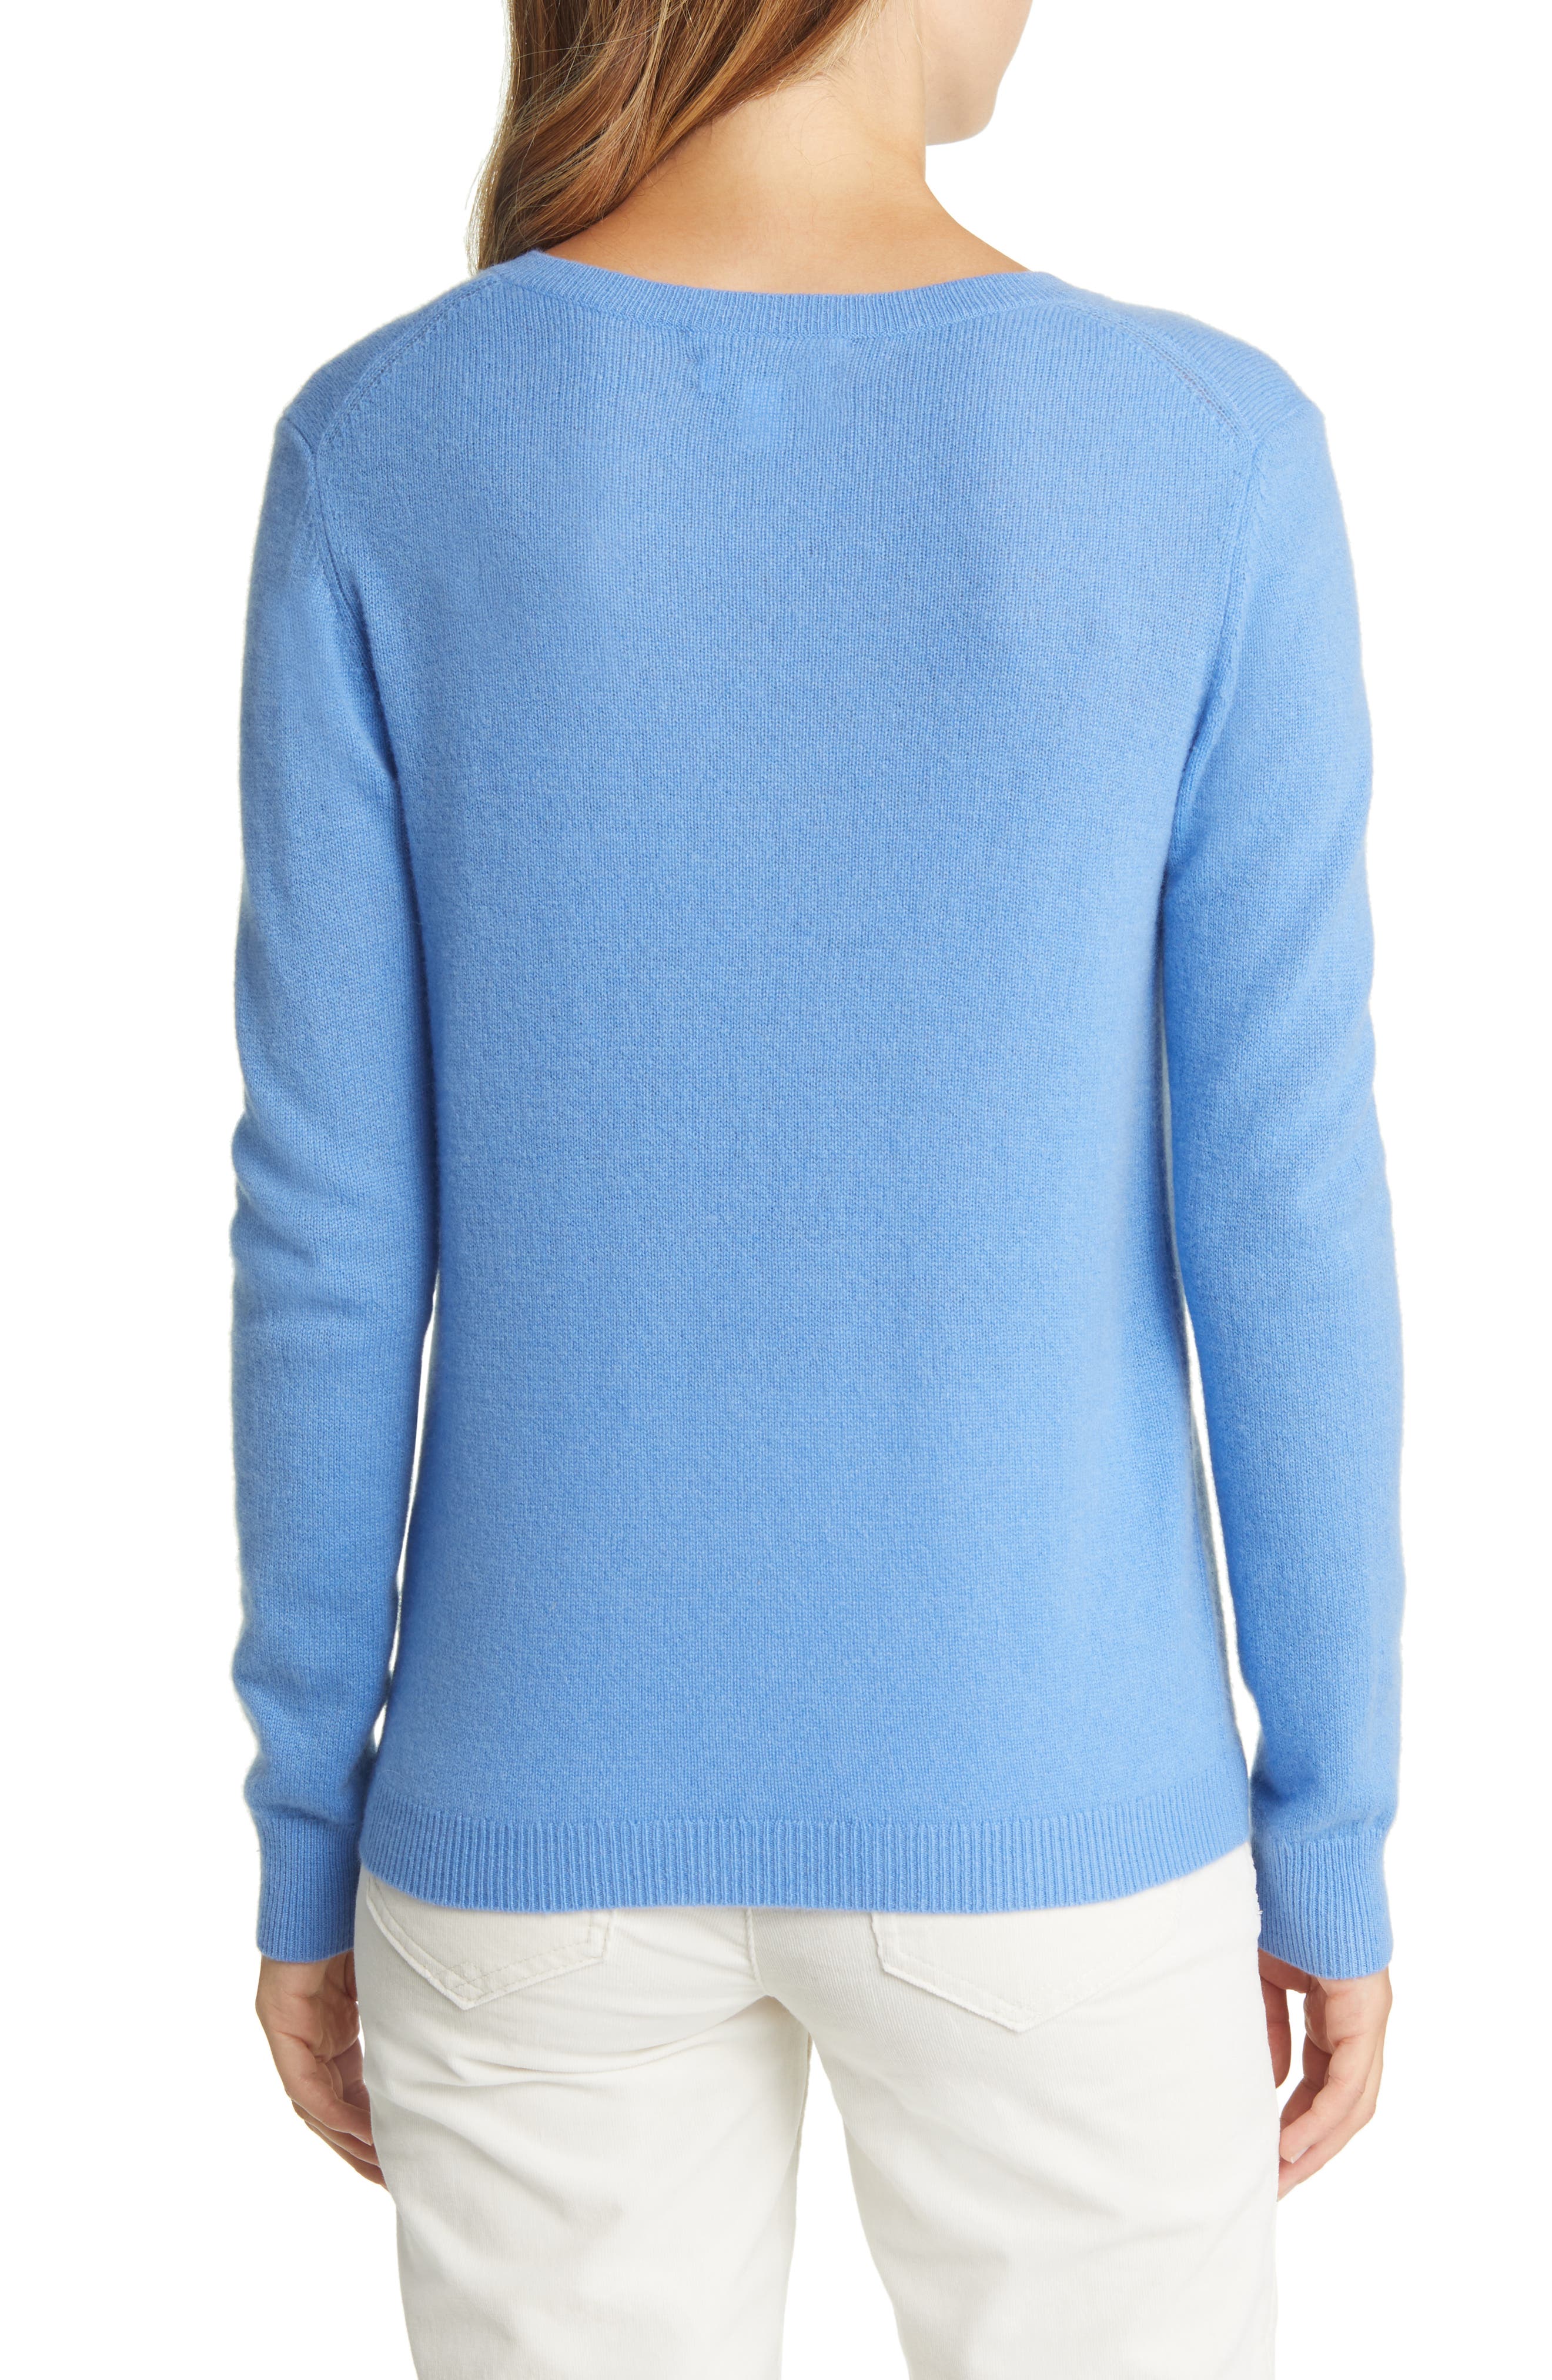 Lilax Little Boys Basic Long Sleeve V-Neck Classic Knit Cardigan Sweater 